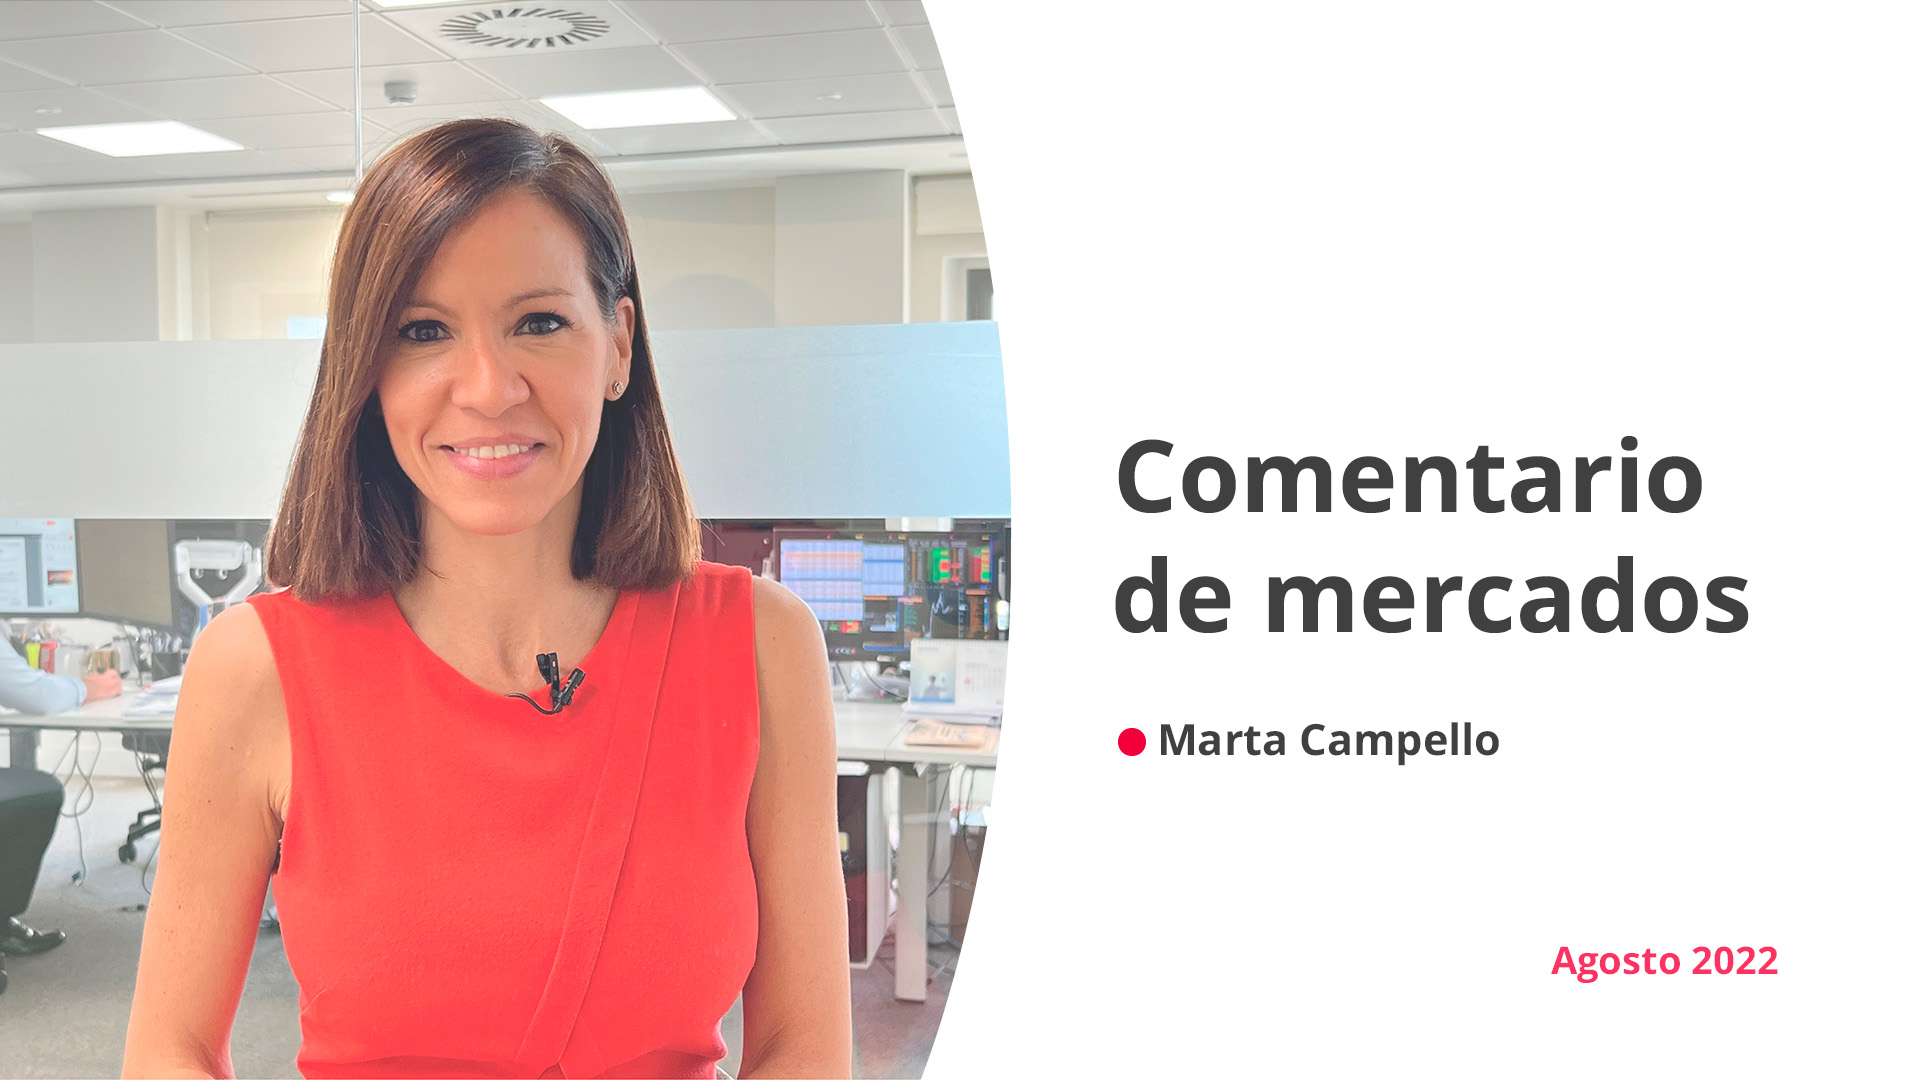 Marta Campello visión de mercados